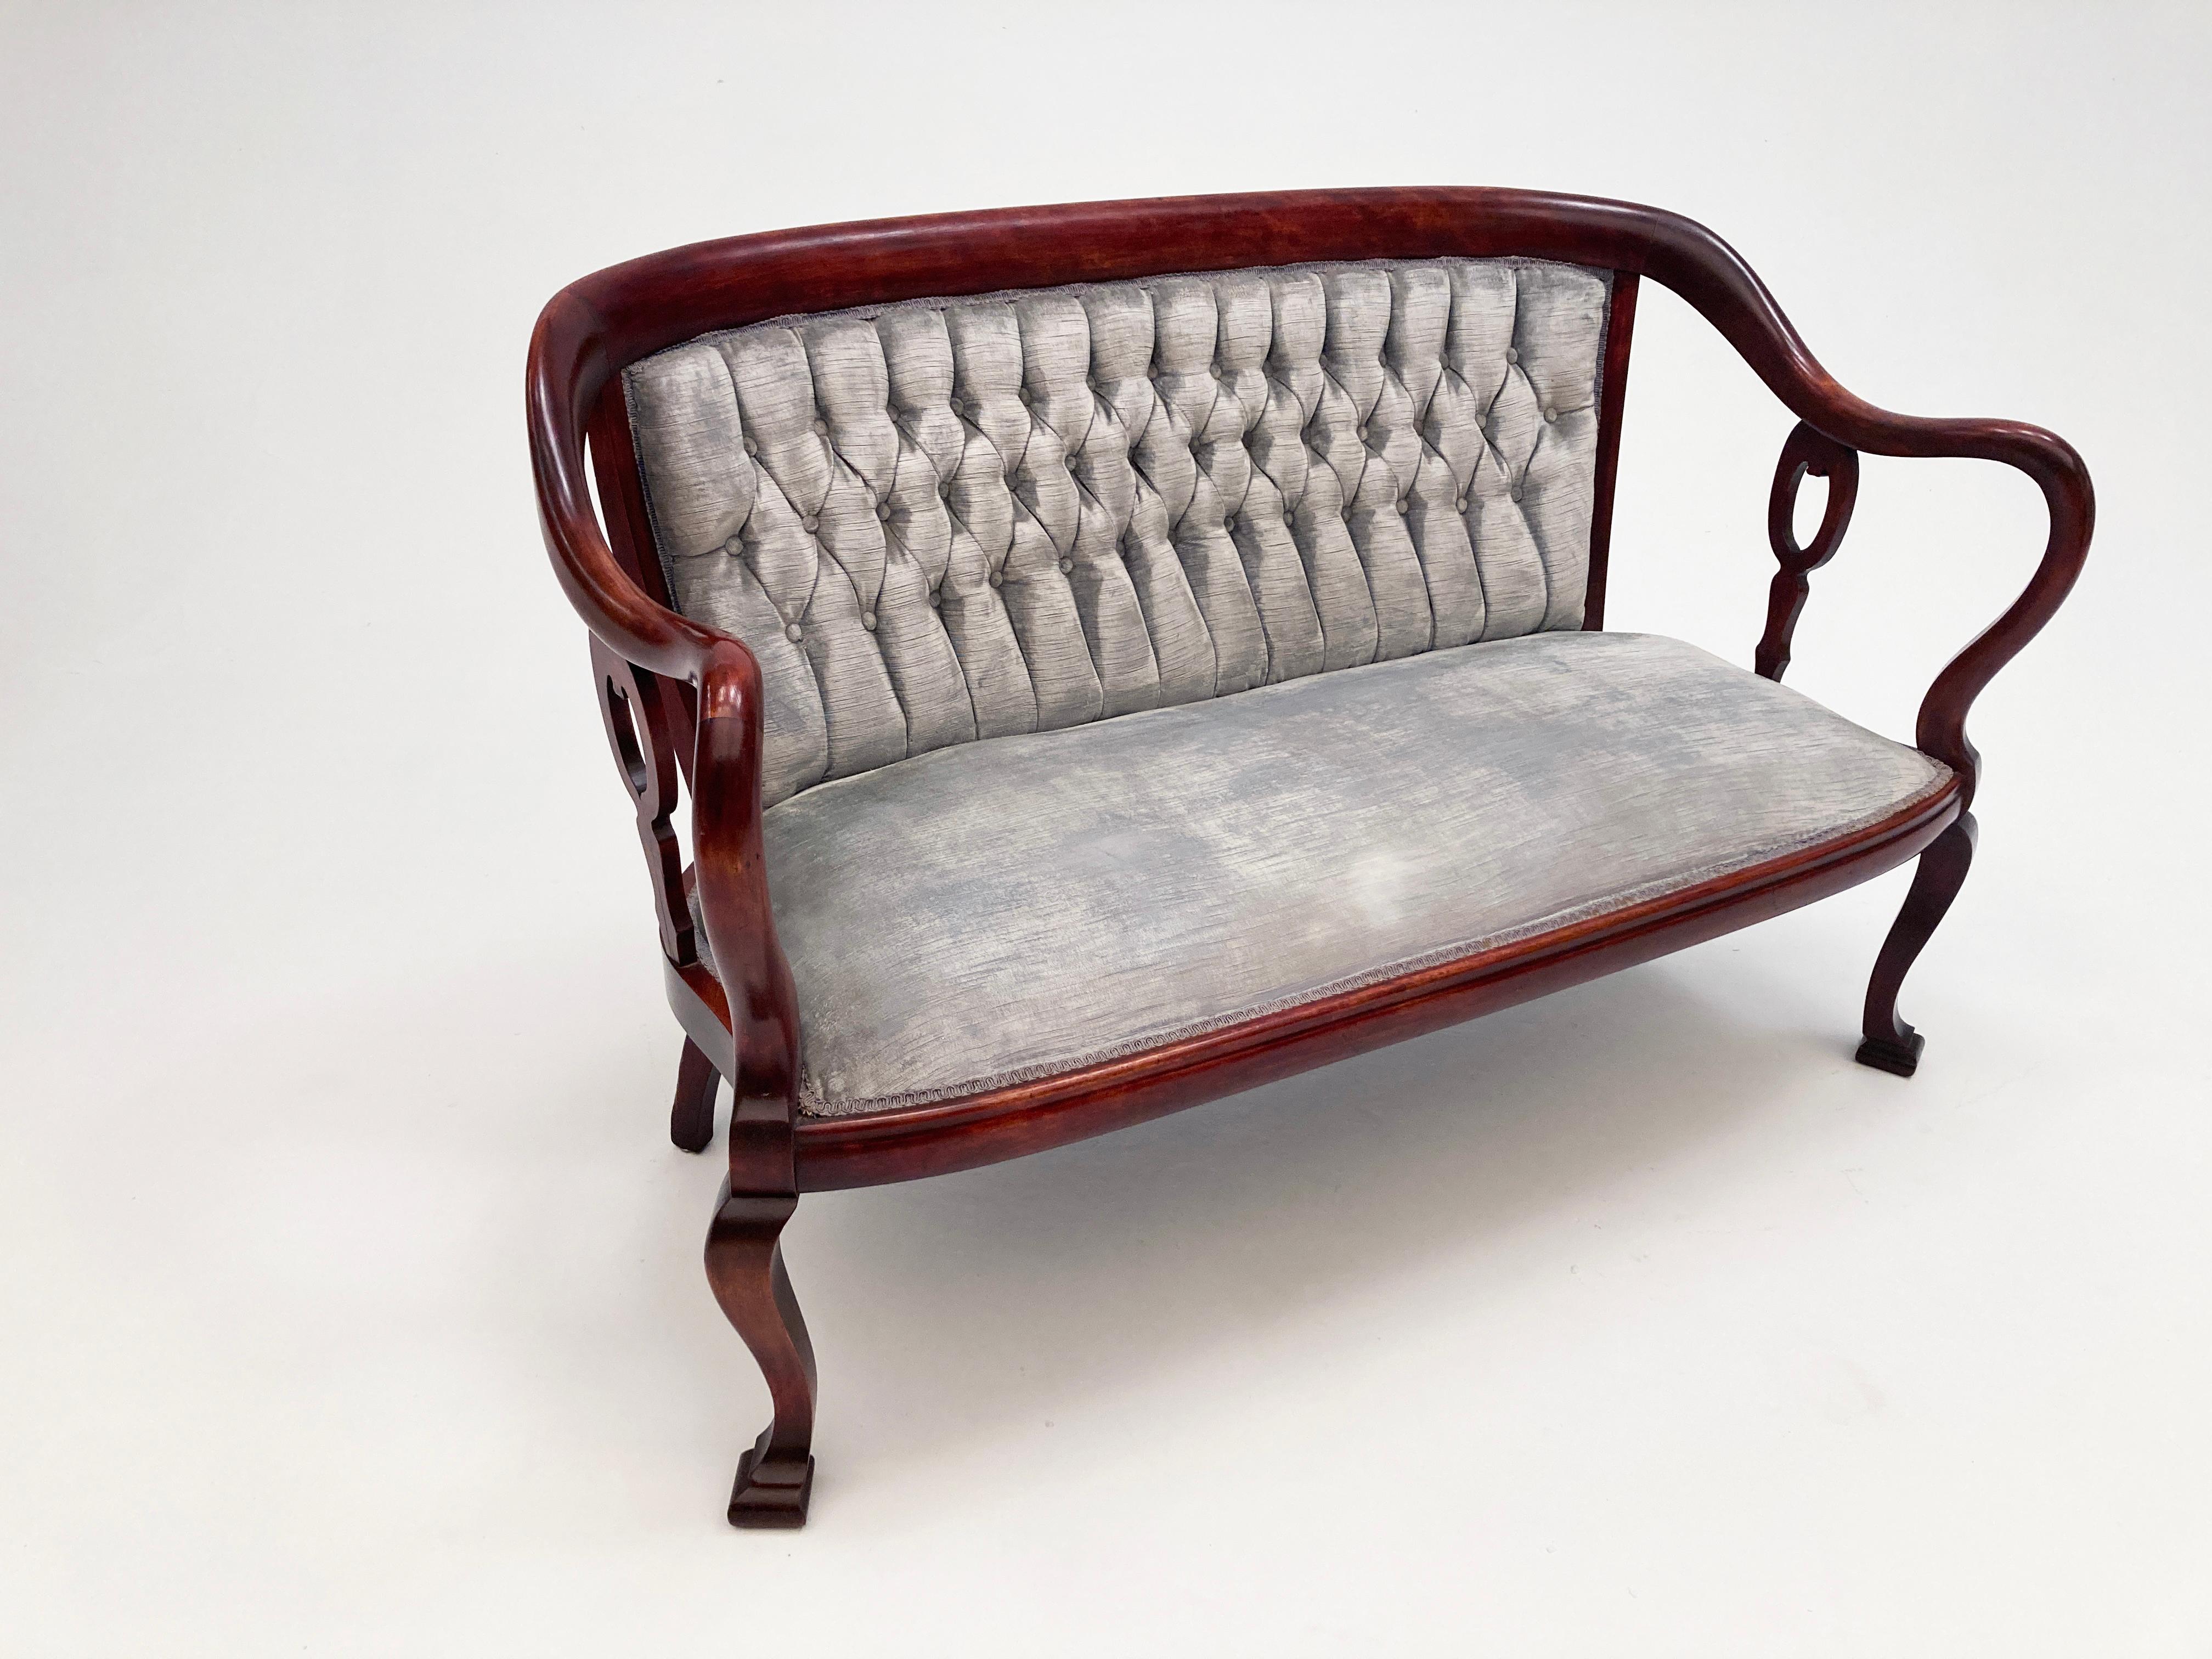 Georgian 19th Century English Mahogany Settee, Chair and Rocker - Set of Three  For Sale